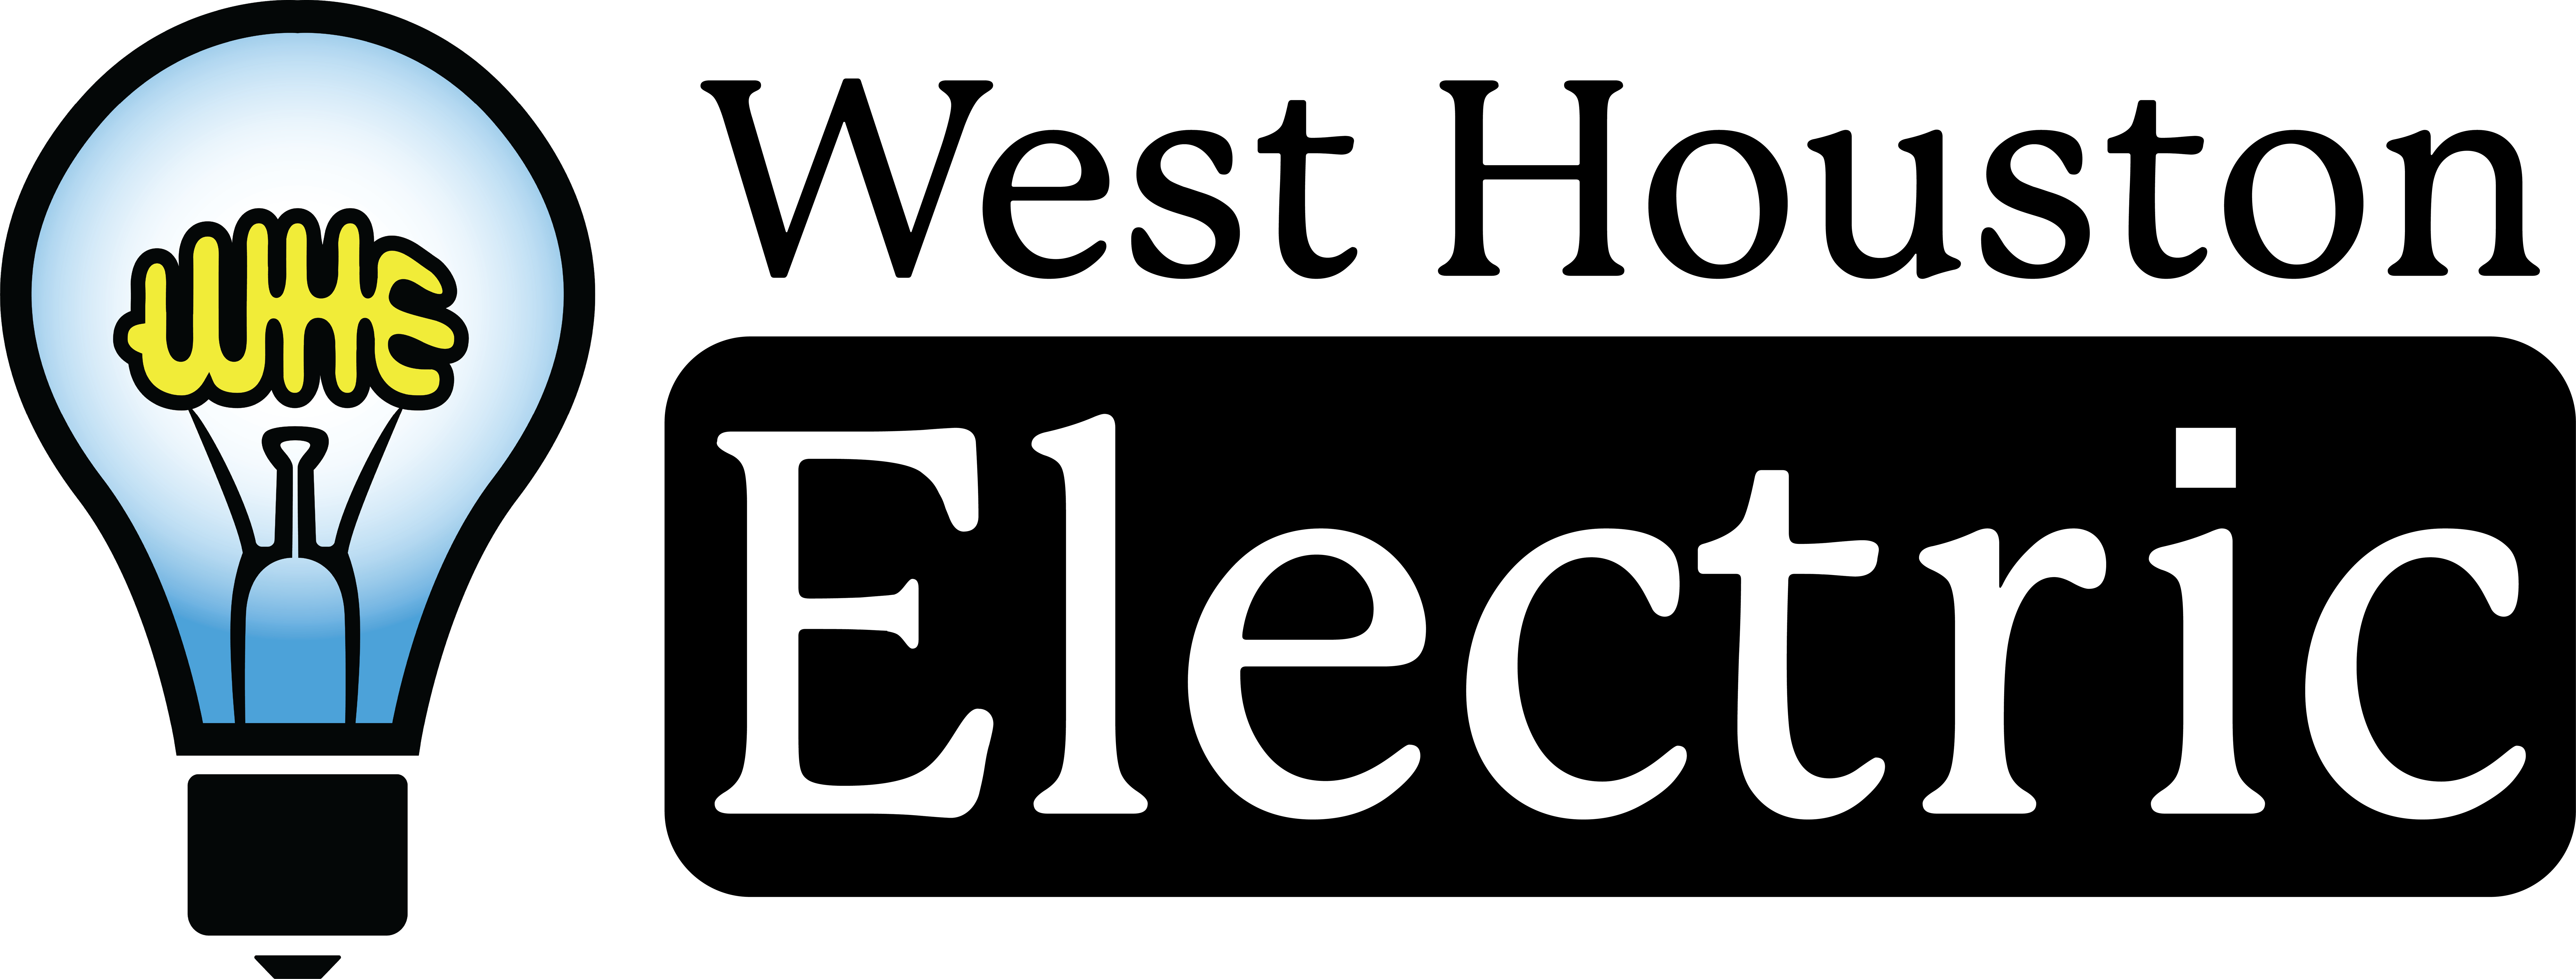 West Houston Electric, Inc Logo